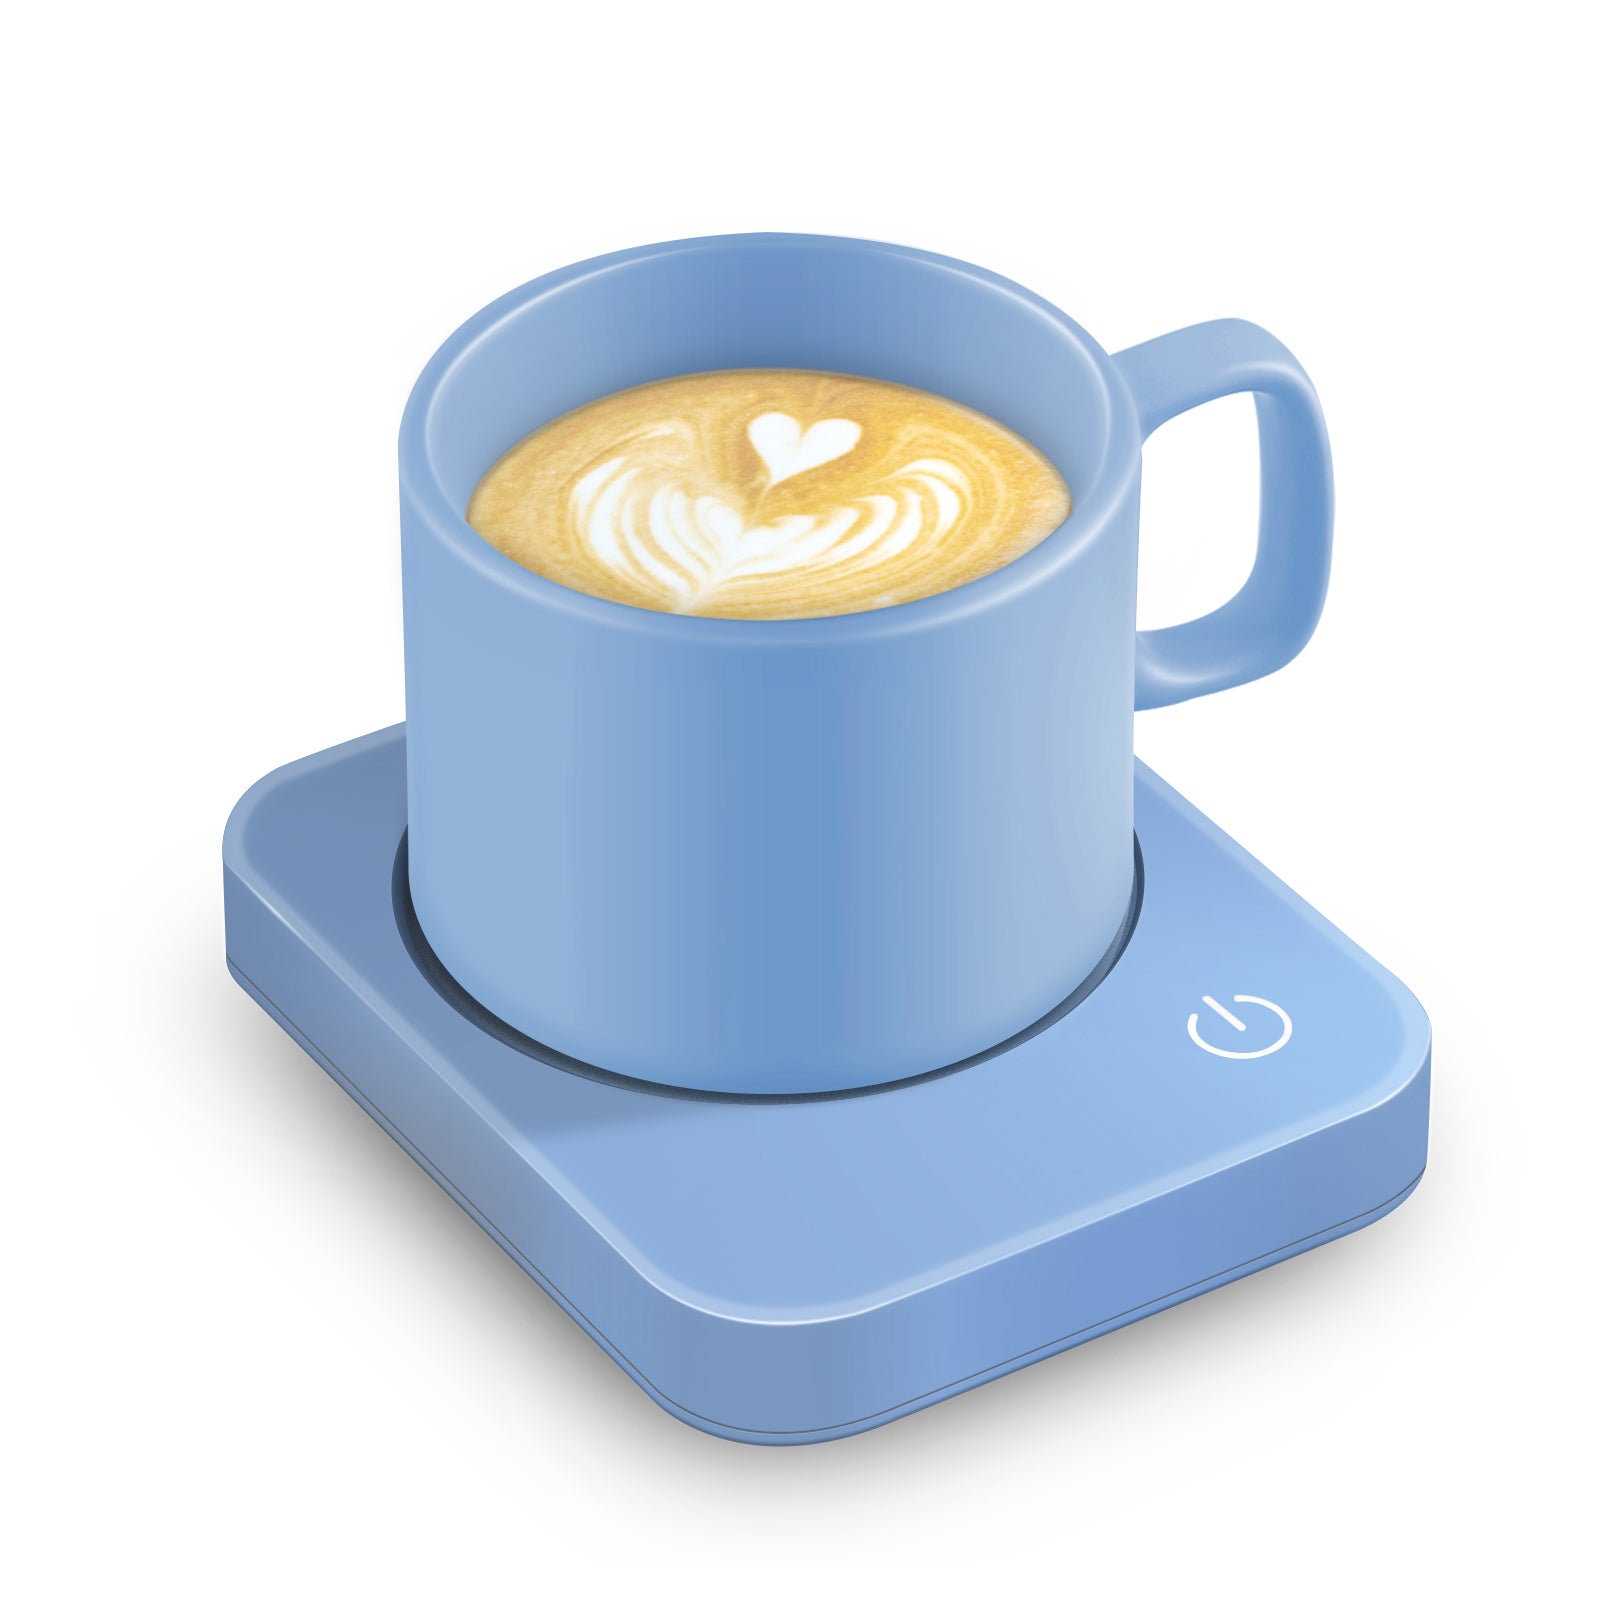 ANBANGLIN Coffee Mug Warmer, Coffee Warmer for Desk with Auto Shut Off, Coffee Cup Warmer for Coffee Milk Tea, Candle Wax Cup Warmer Heating Plate (